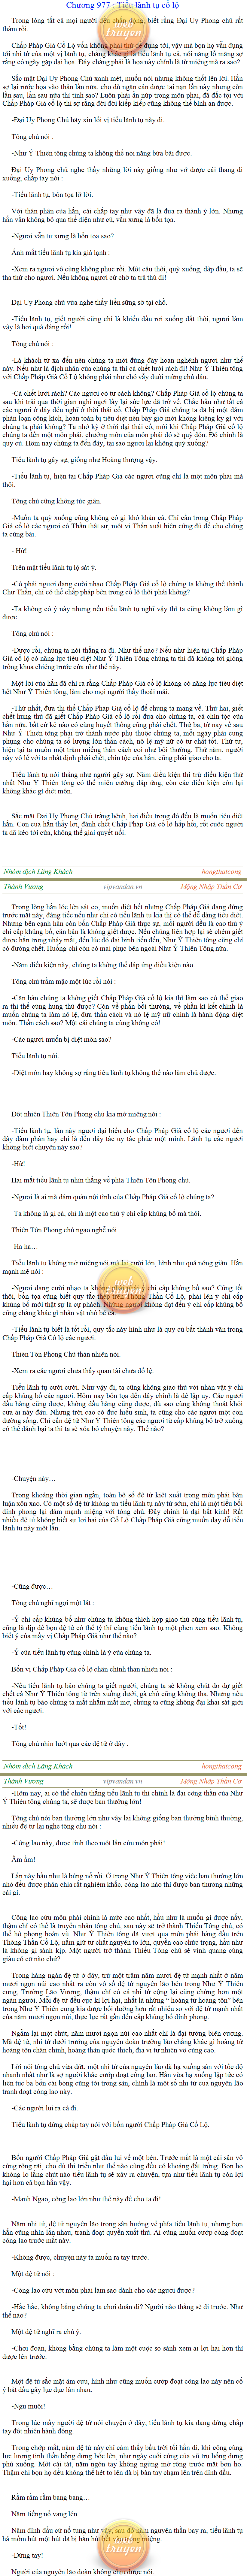 Thanh-vuong-977.png